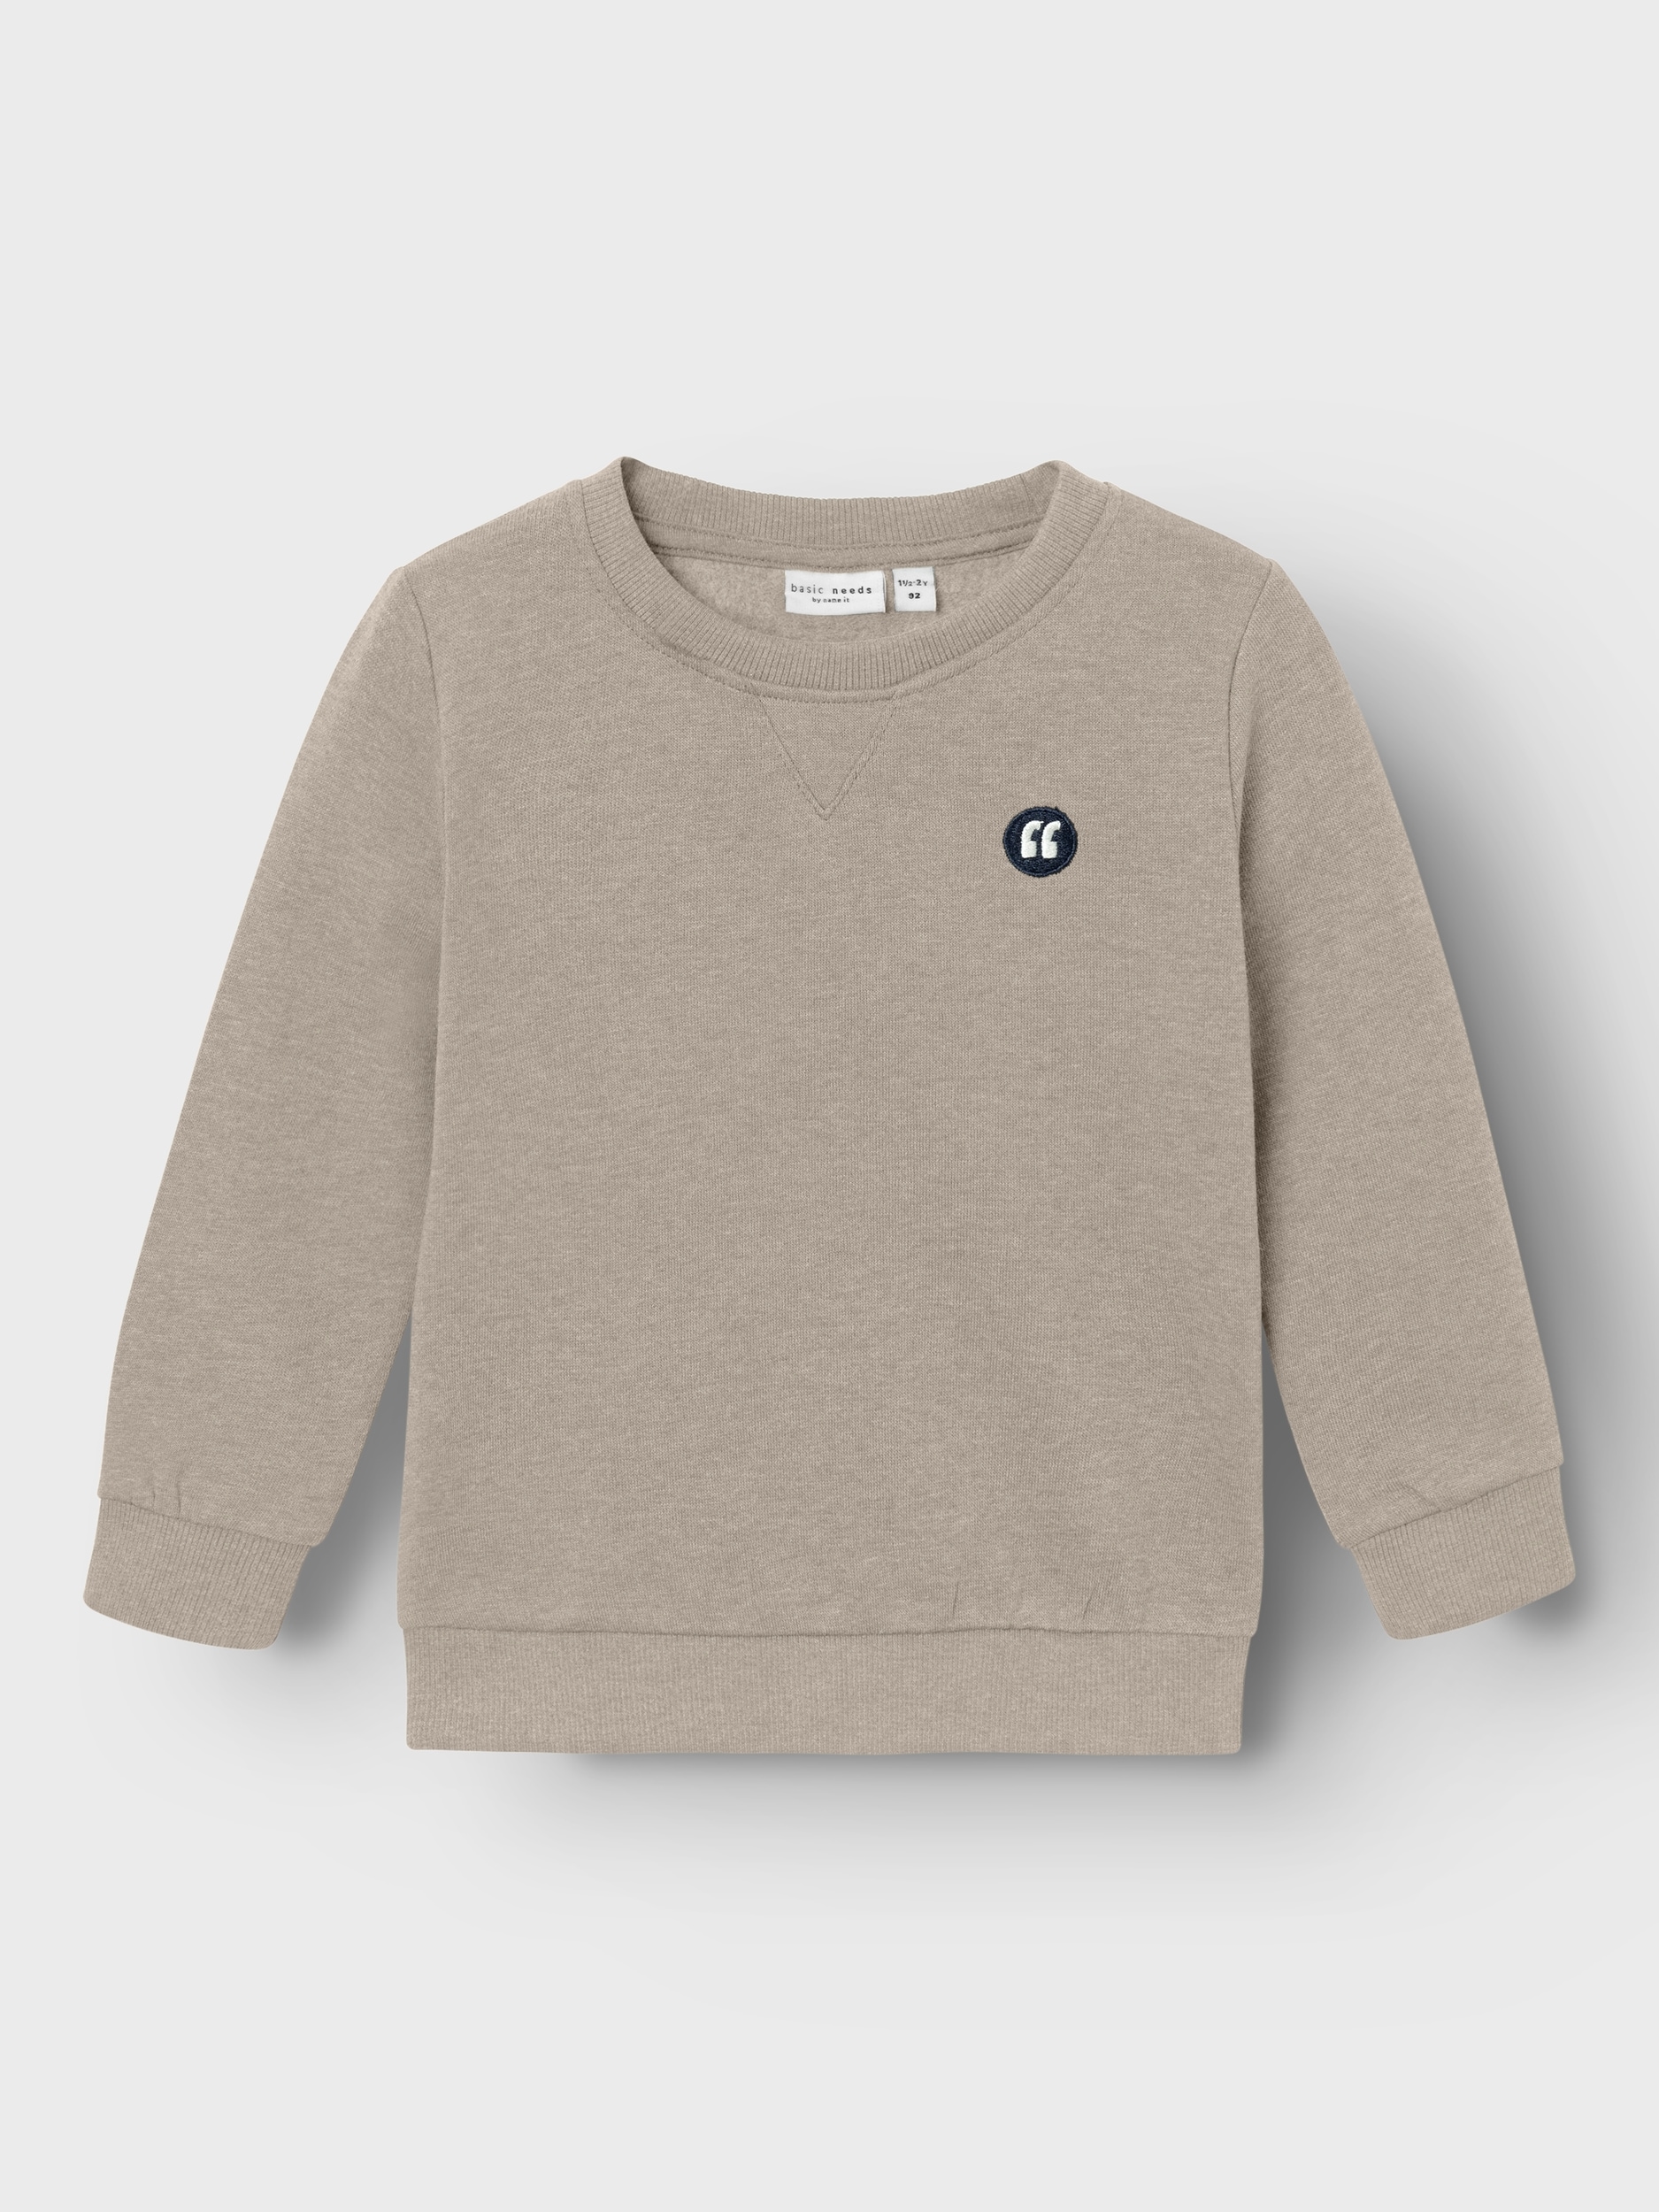 Name It Sweatshirt NOOS« SWEAT LS BRU kaufen »NMMVIMO online